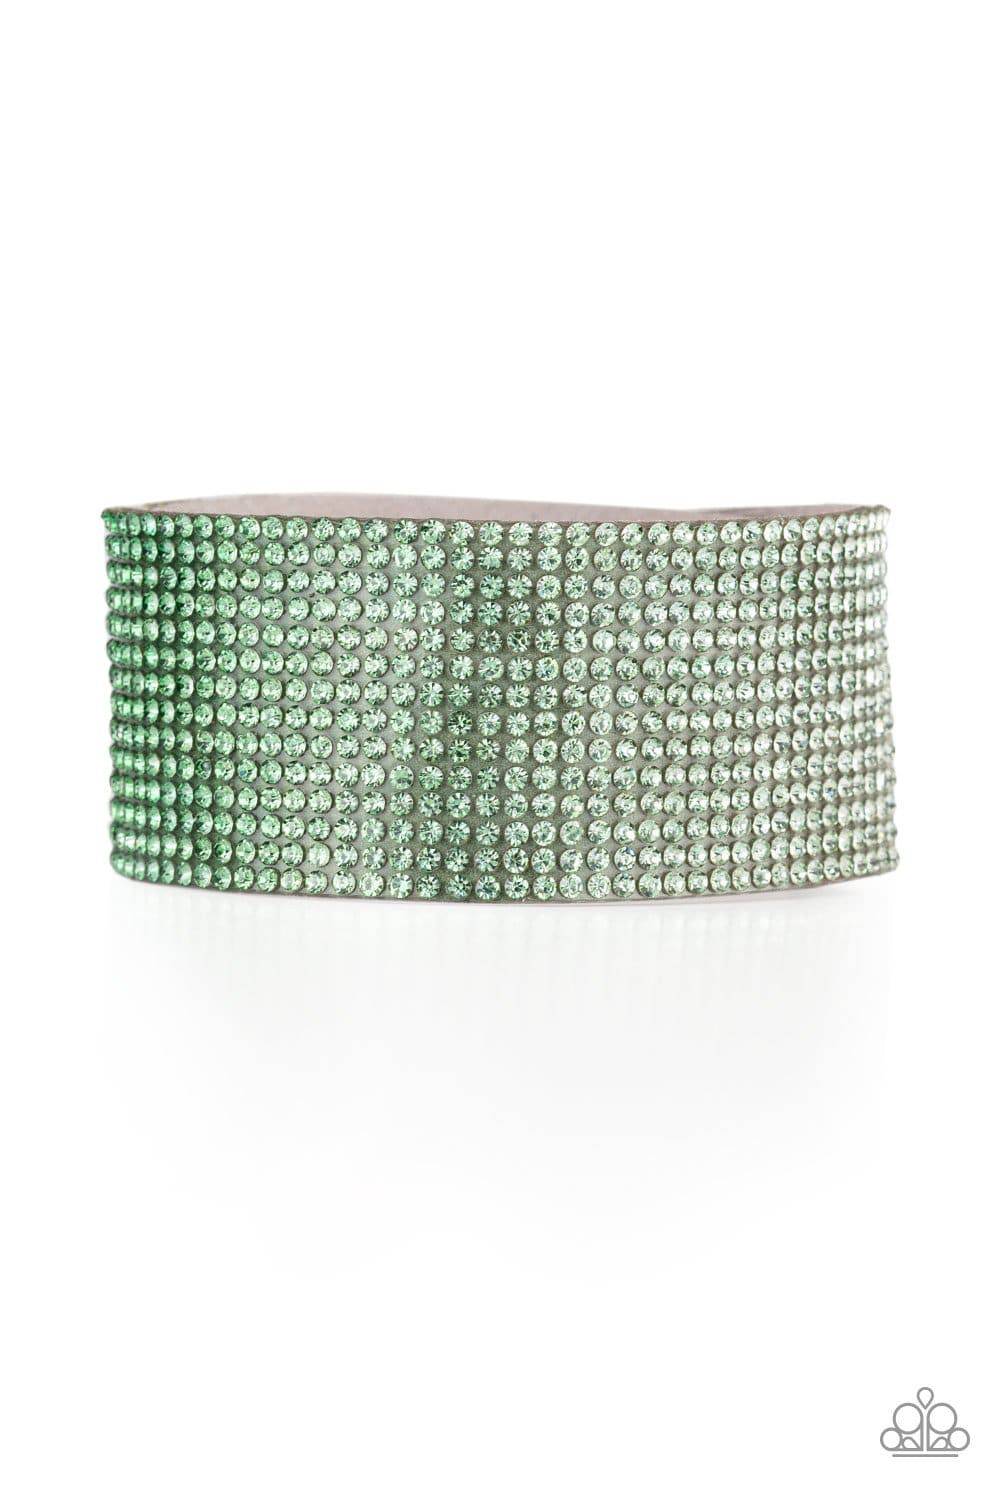 Fade Out - Green Rhinestone Wrap Bracelet - Paparazzi Accessories - GlaMarous Titi Jewels